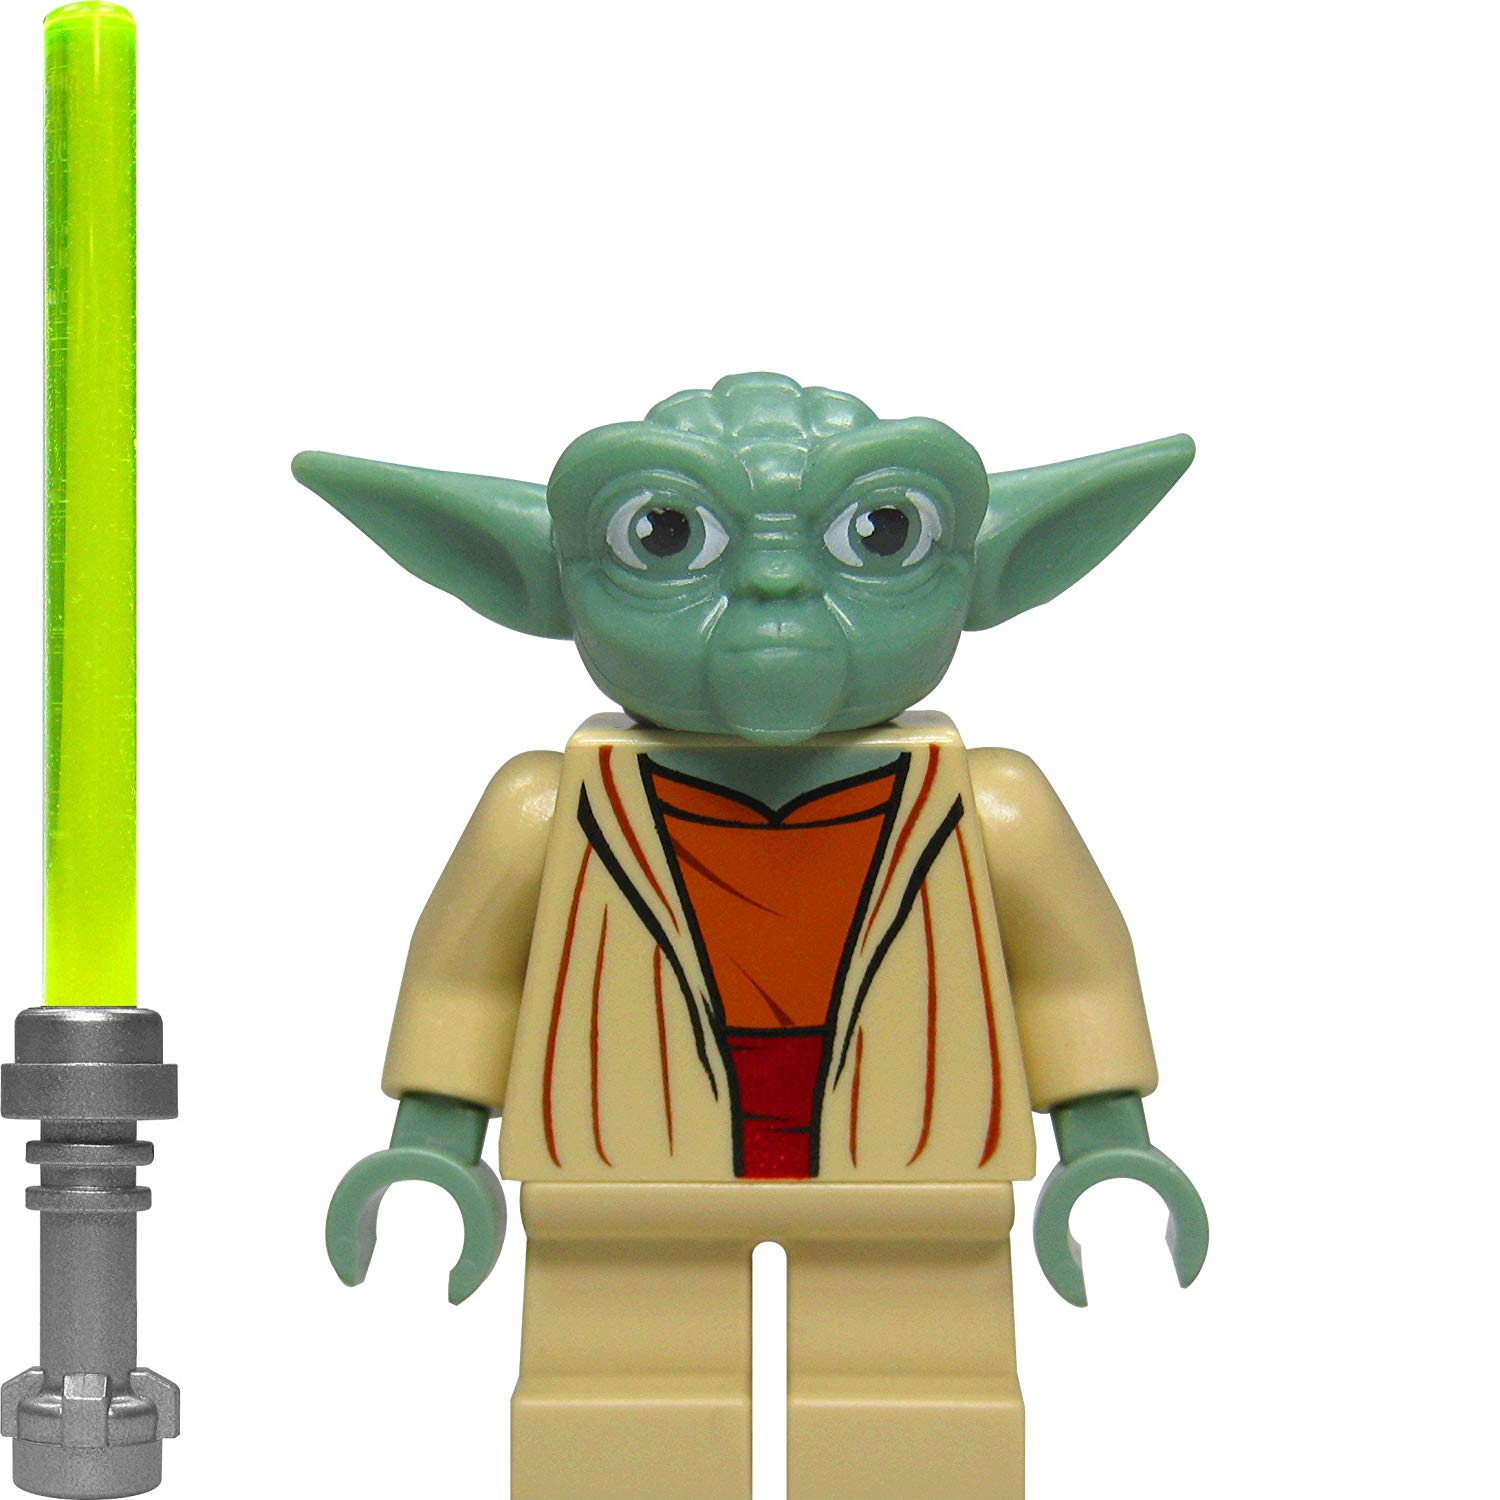 Lego Star Wars Master Yoda Minifigure With Green Lightsaber